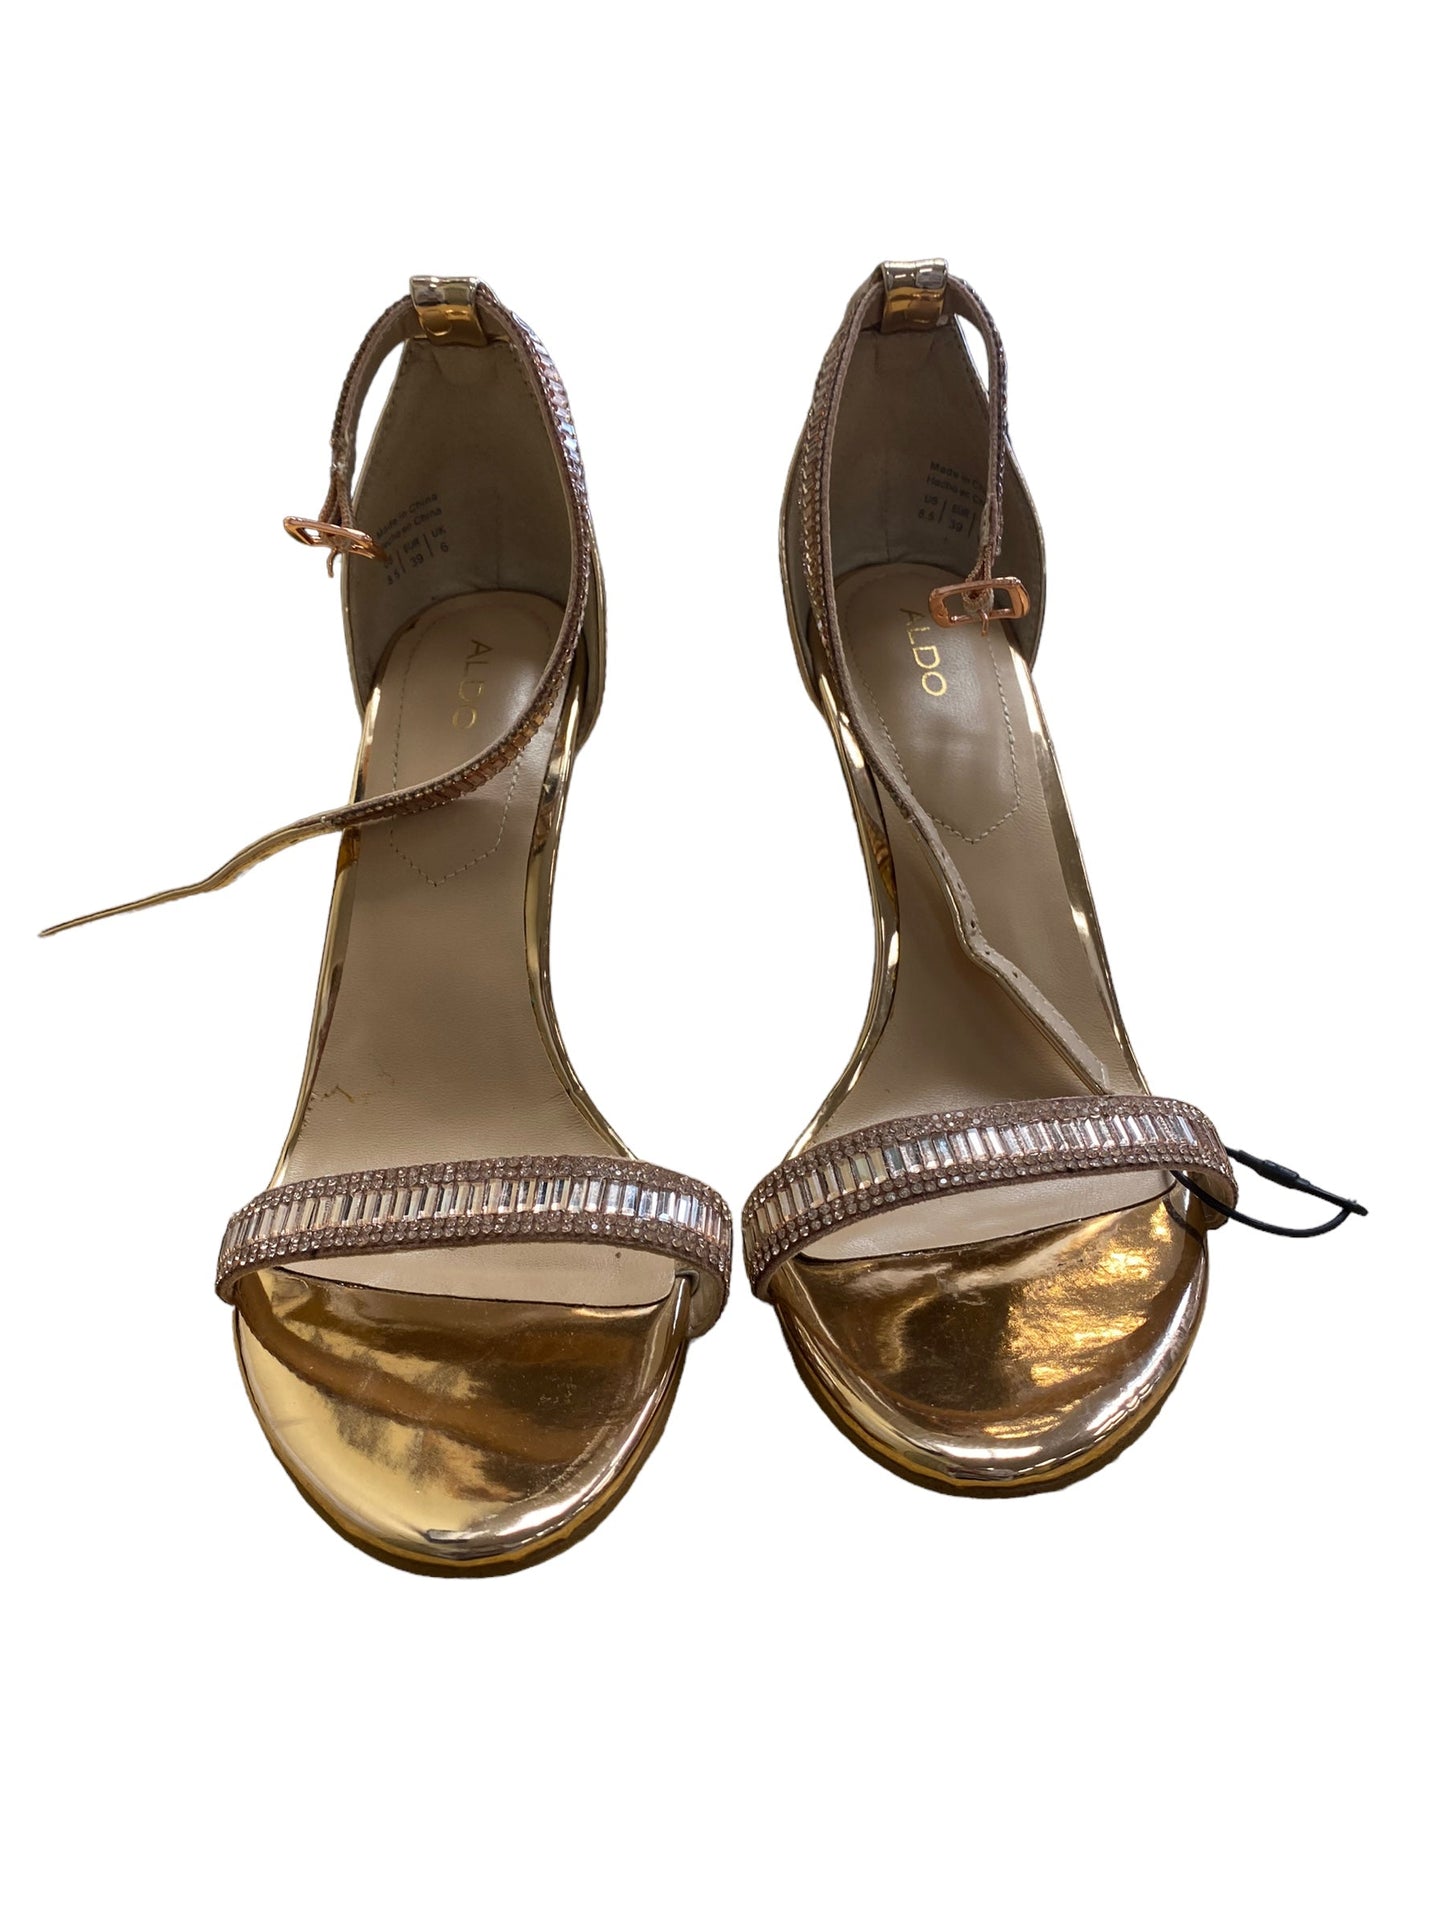 Shoes Heels Stiletto By Aldo  Size: 8.5